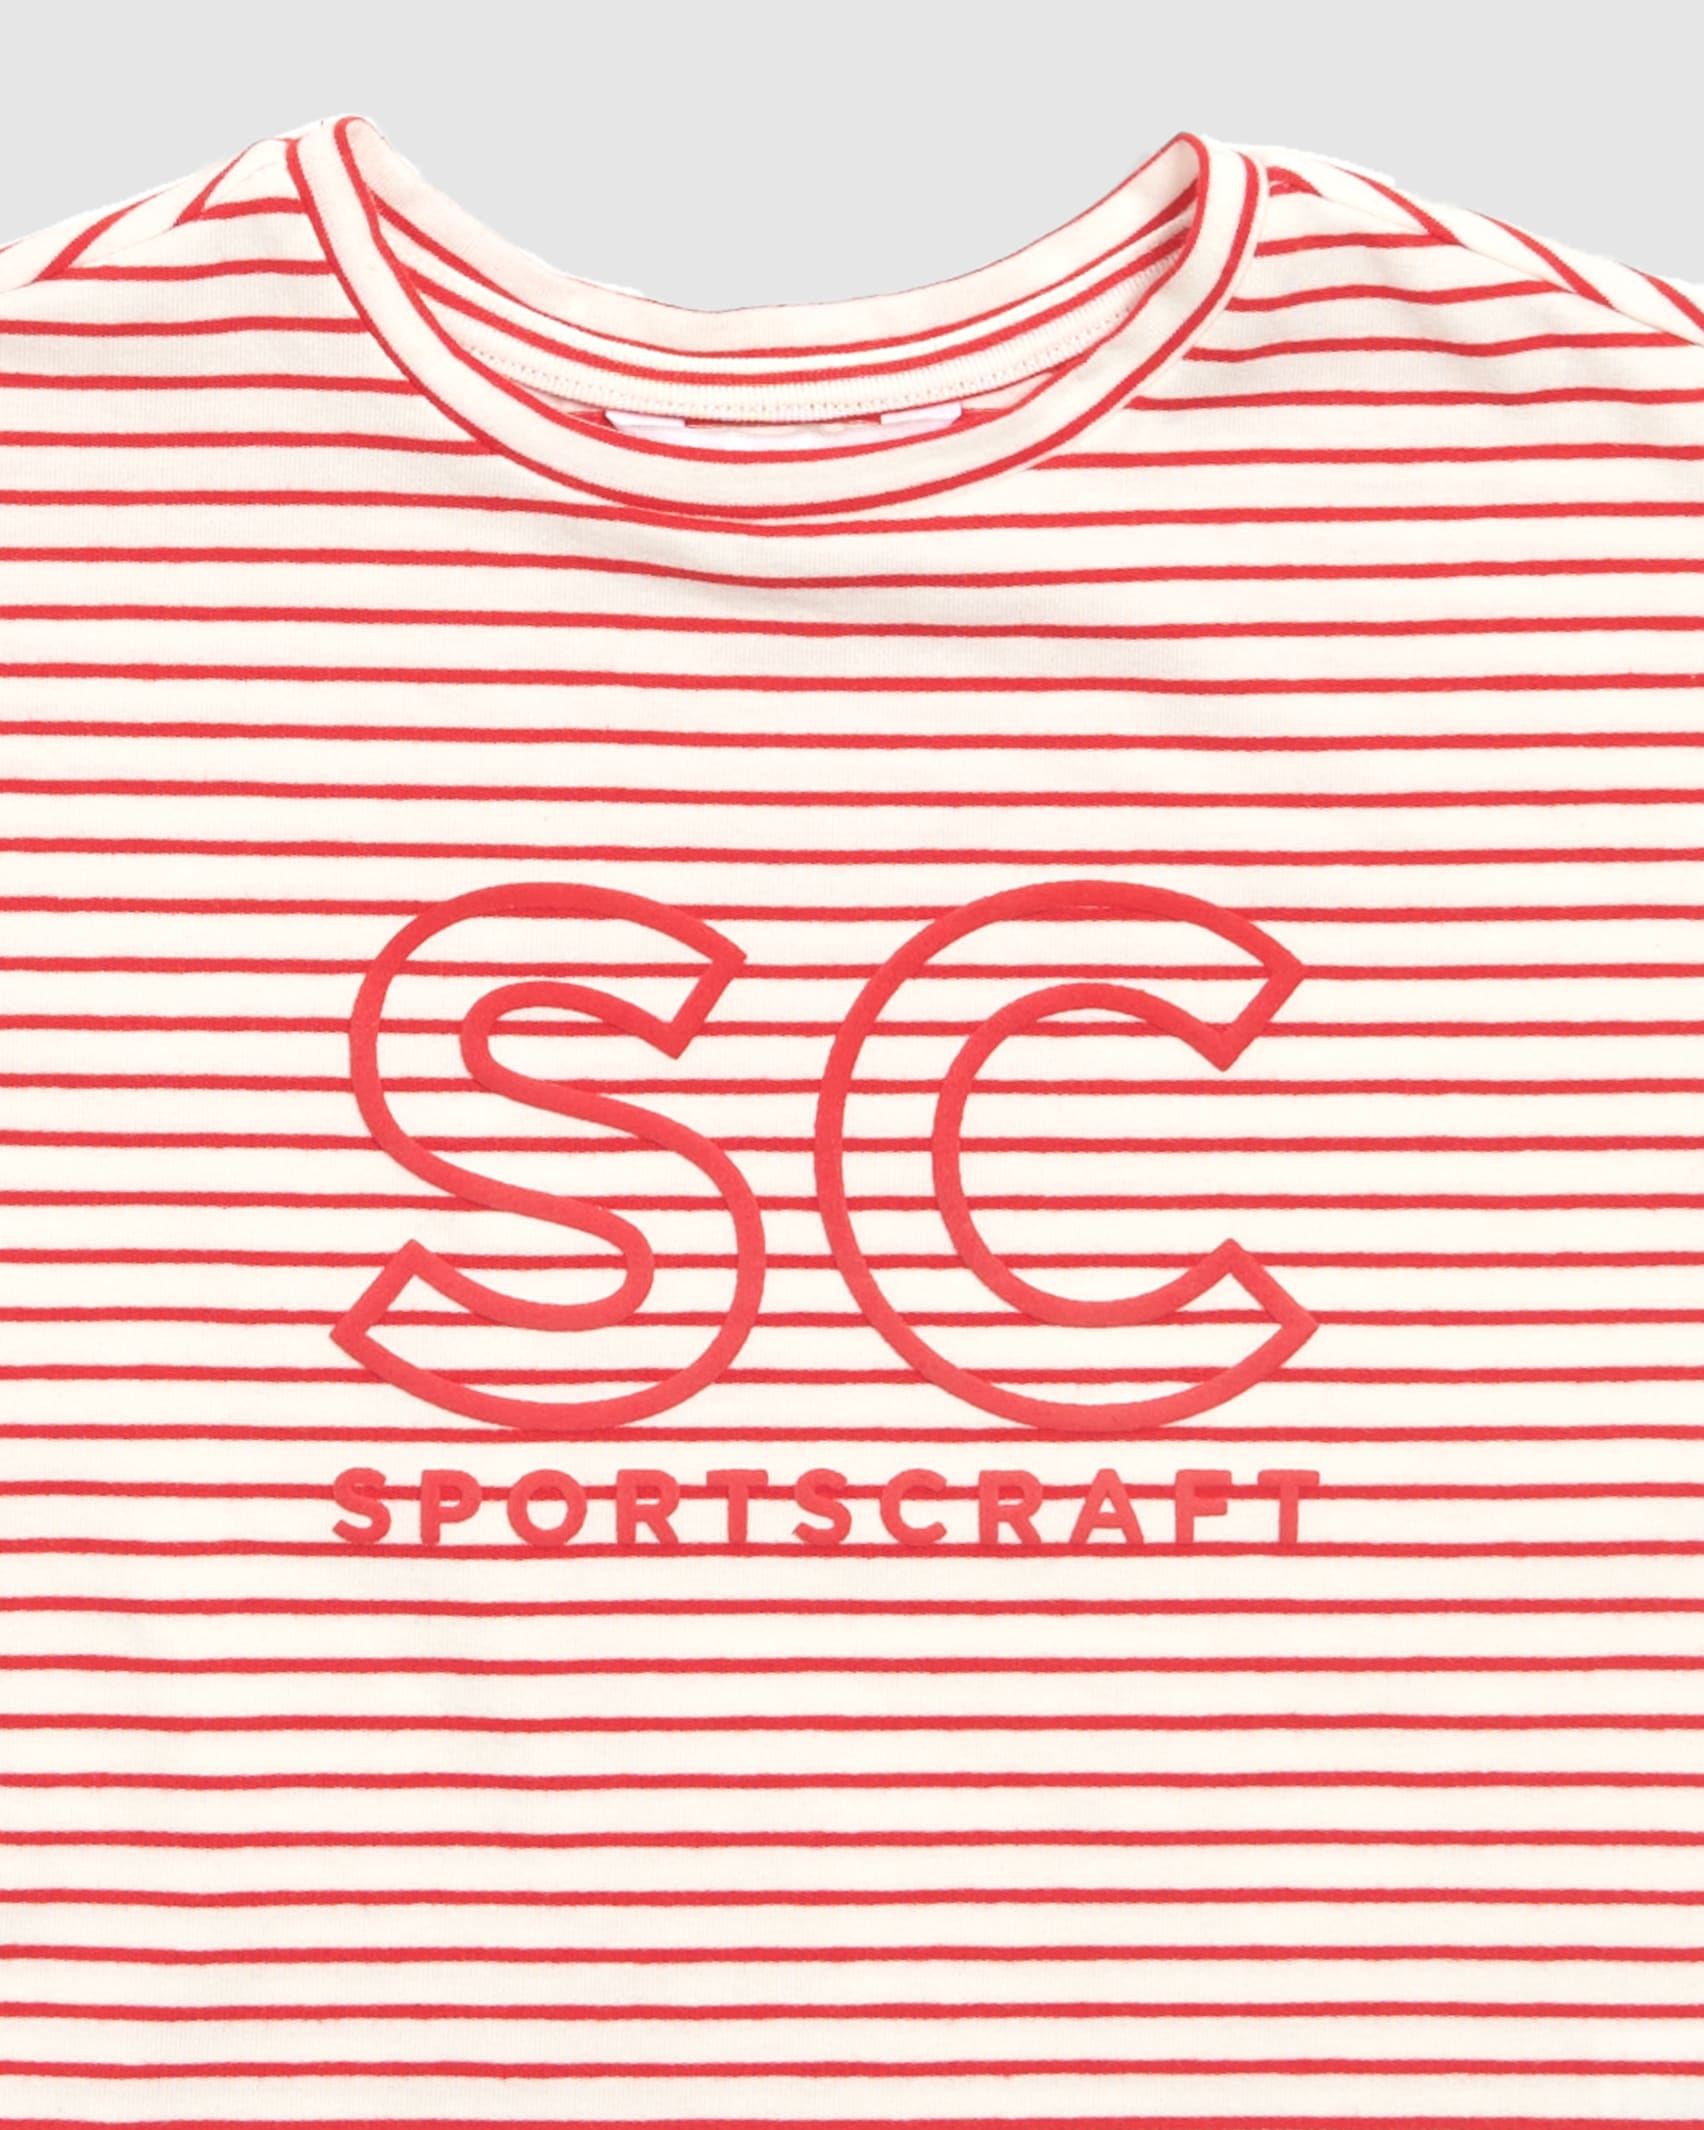 Logo Stripe Tee in WHITE/RED